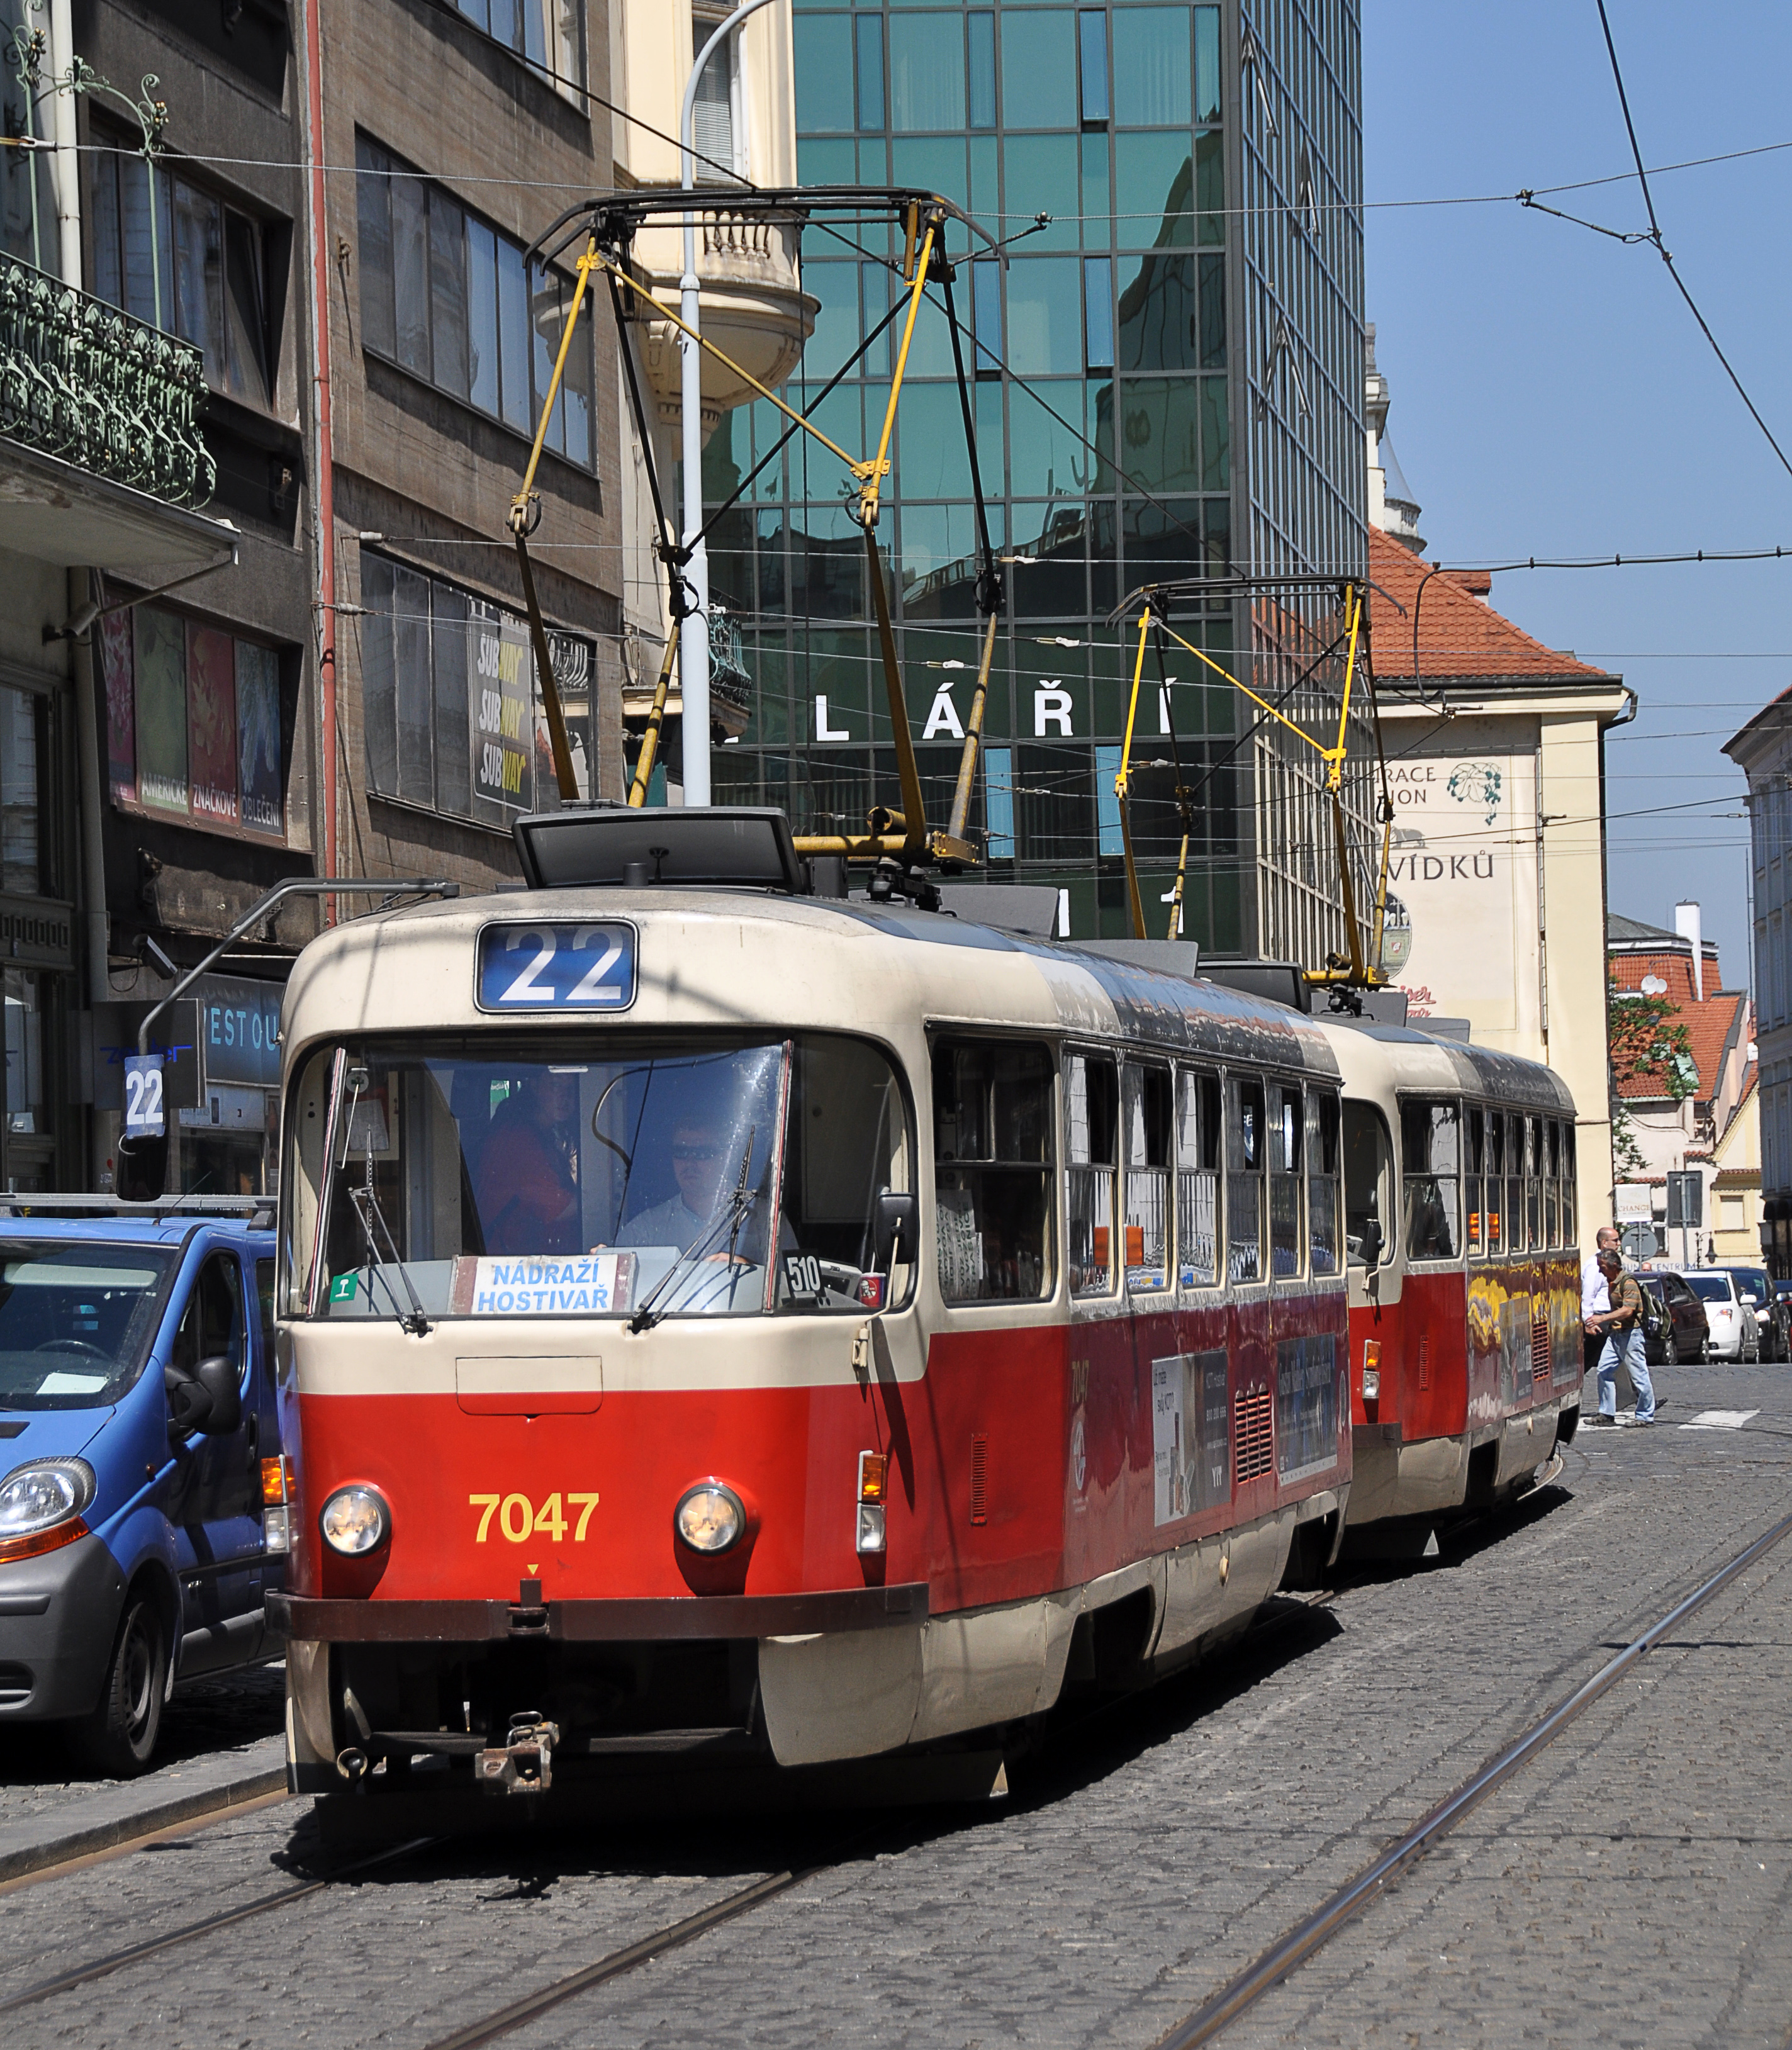 11-05-31-praha-tram-by-RalfR-23